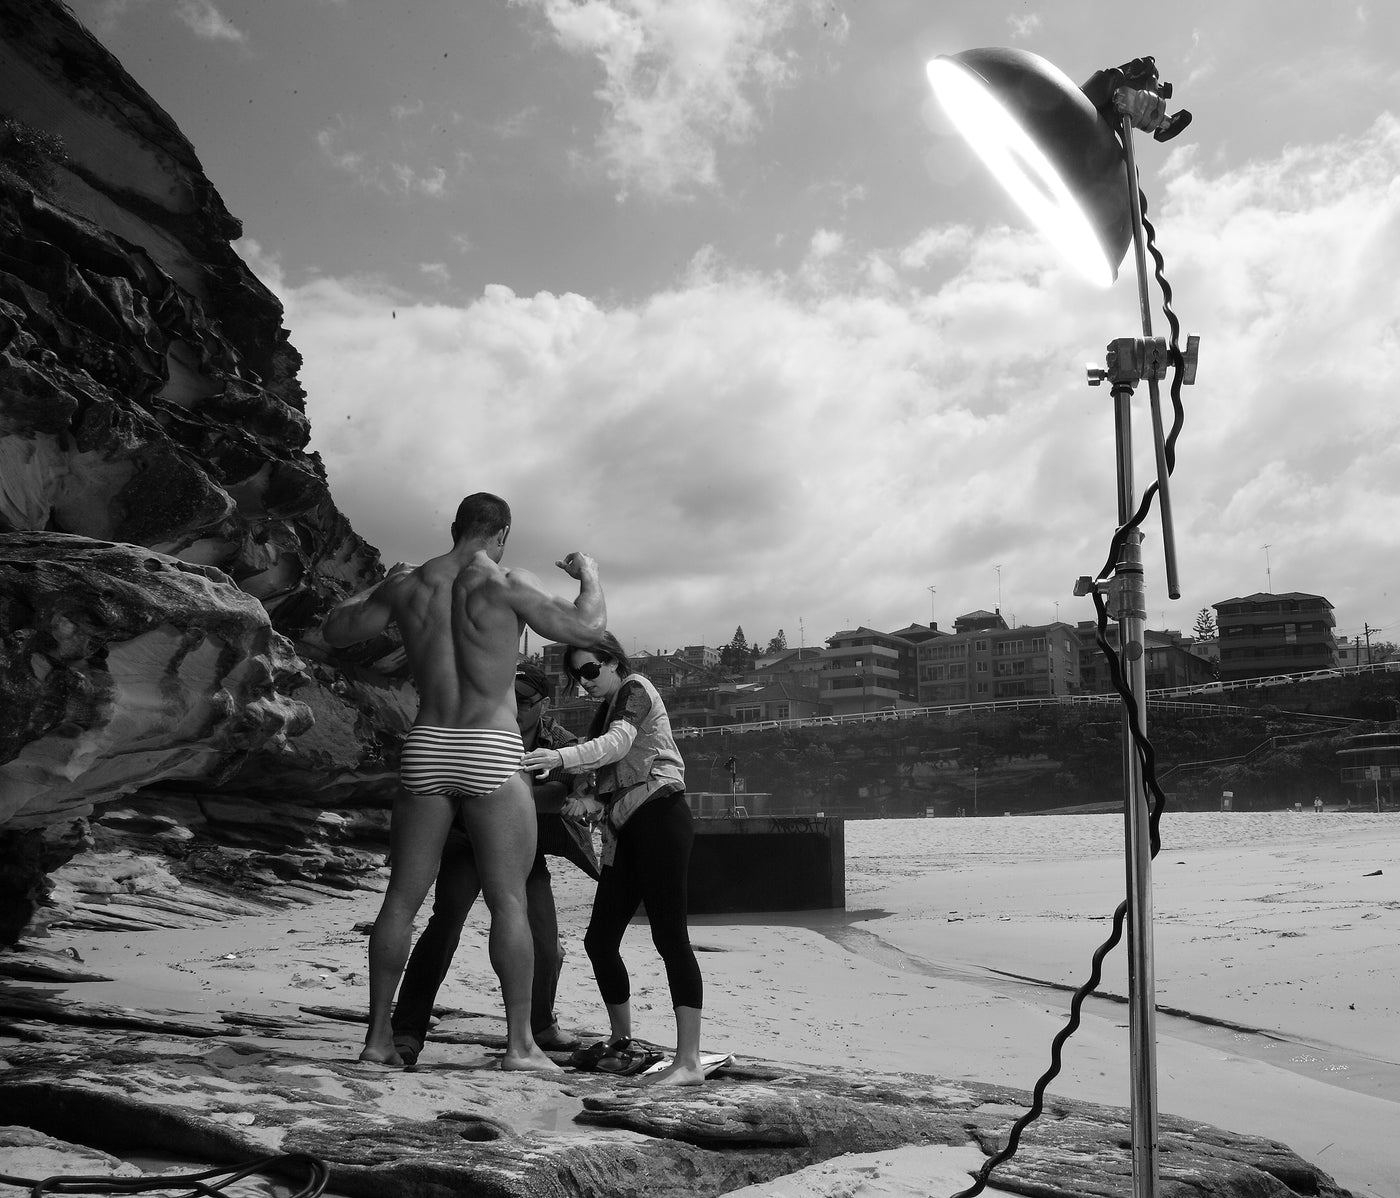 Cocksox behind the scenes image from swimwear photoshoot at Tamarama Beach in Sydney